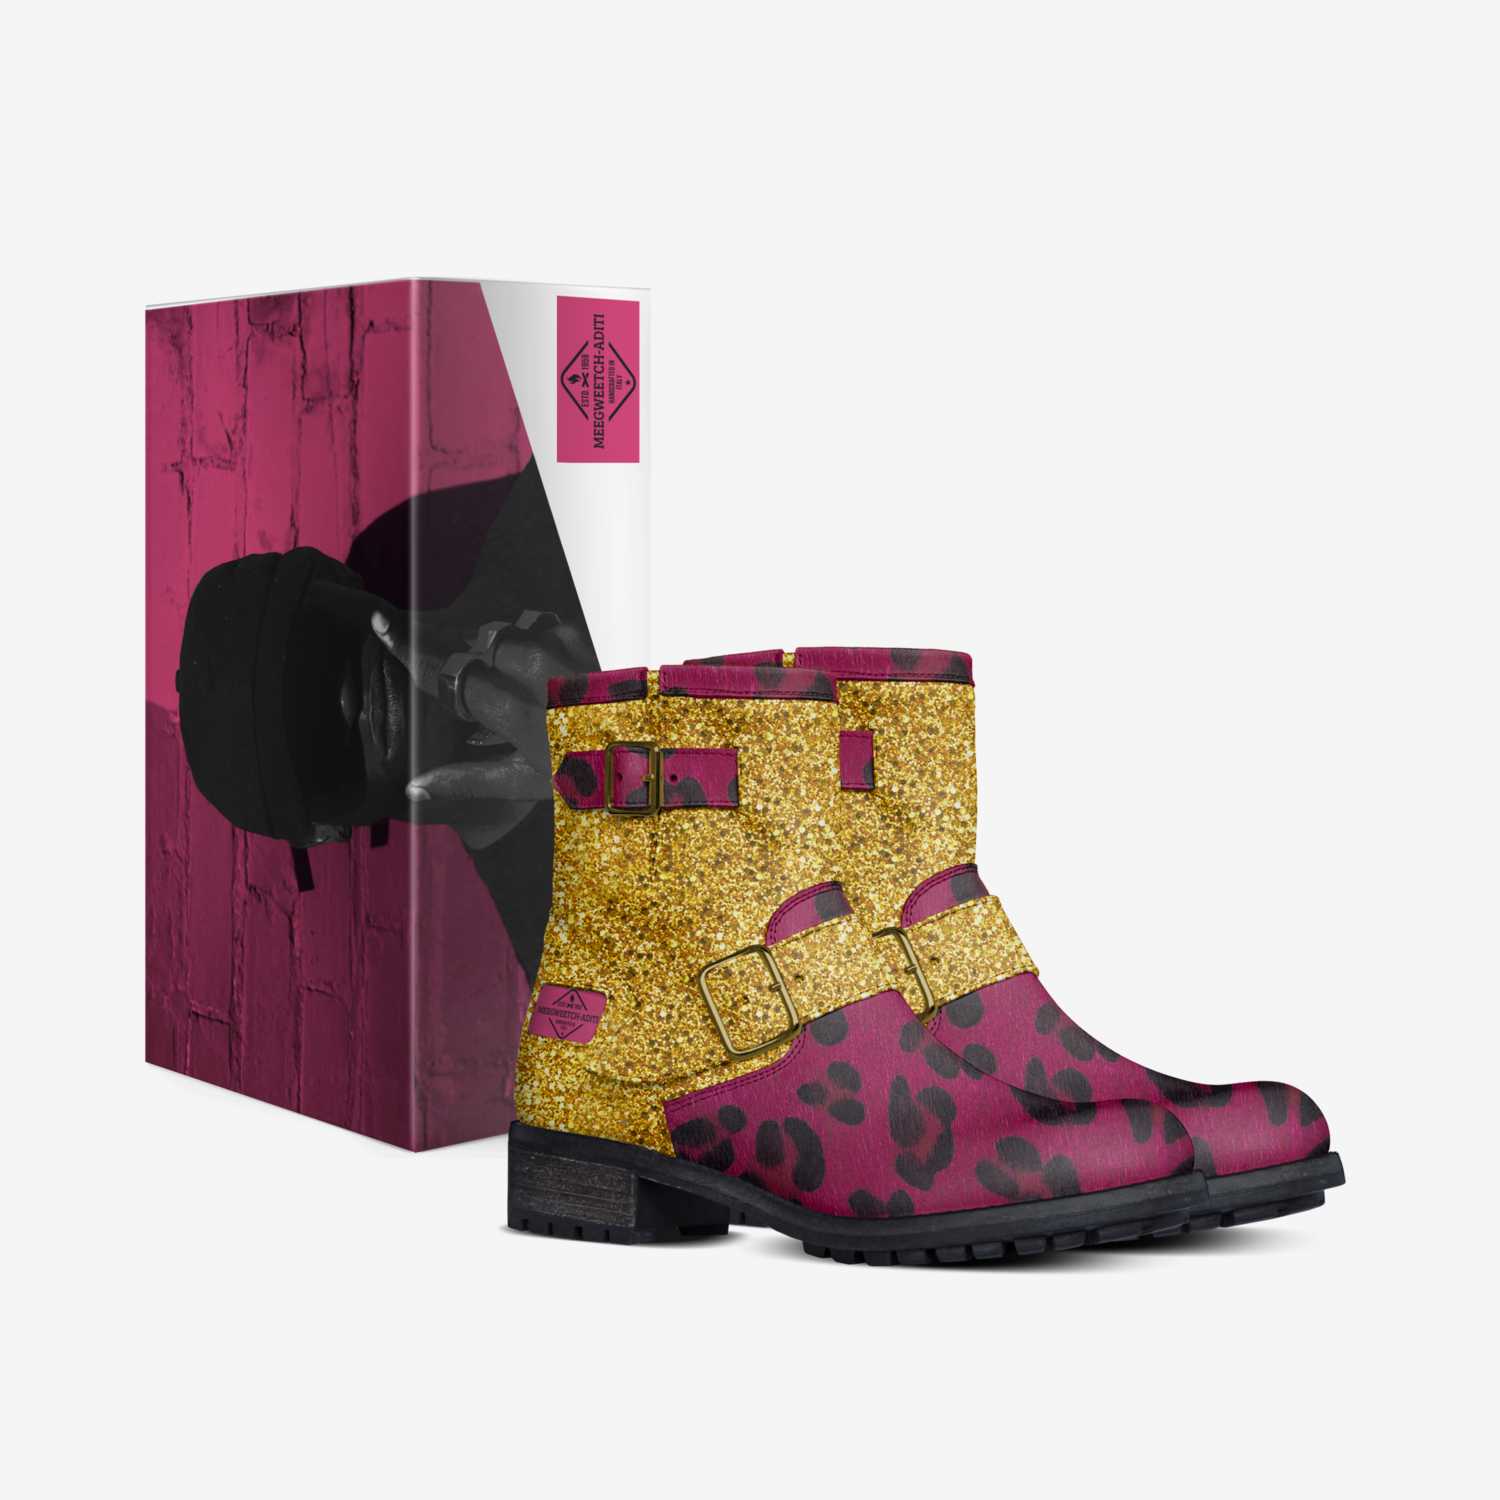 MEEGWEETCH-ADITI custom made in Italy shoes by Aditi-kali Of Wonkey Donkey Bazaar | Box view